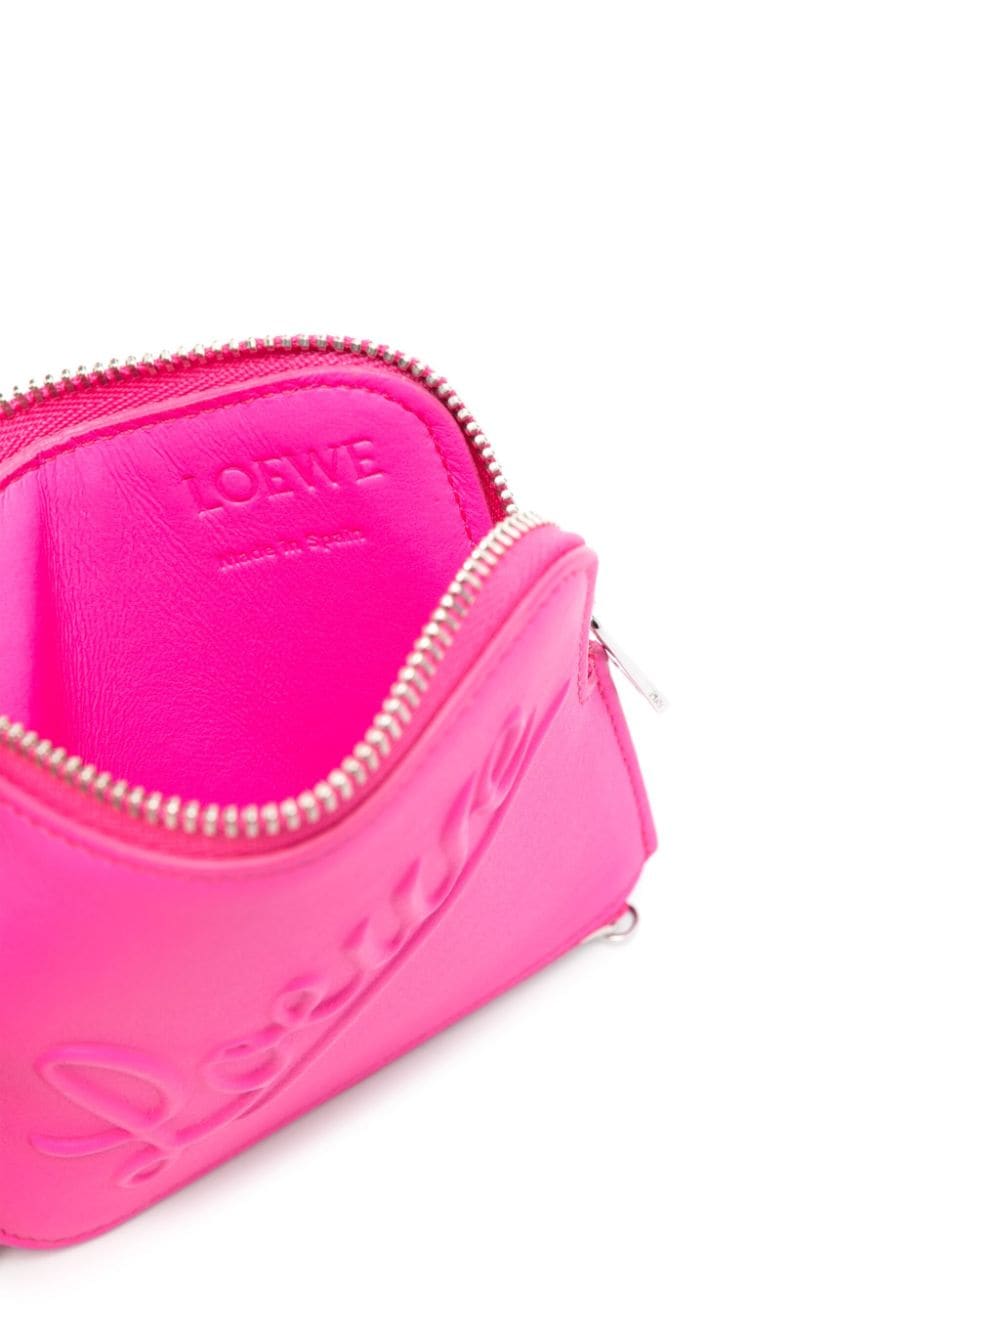 LOEWE embossed-logo leather wallet - Roze